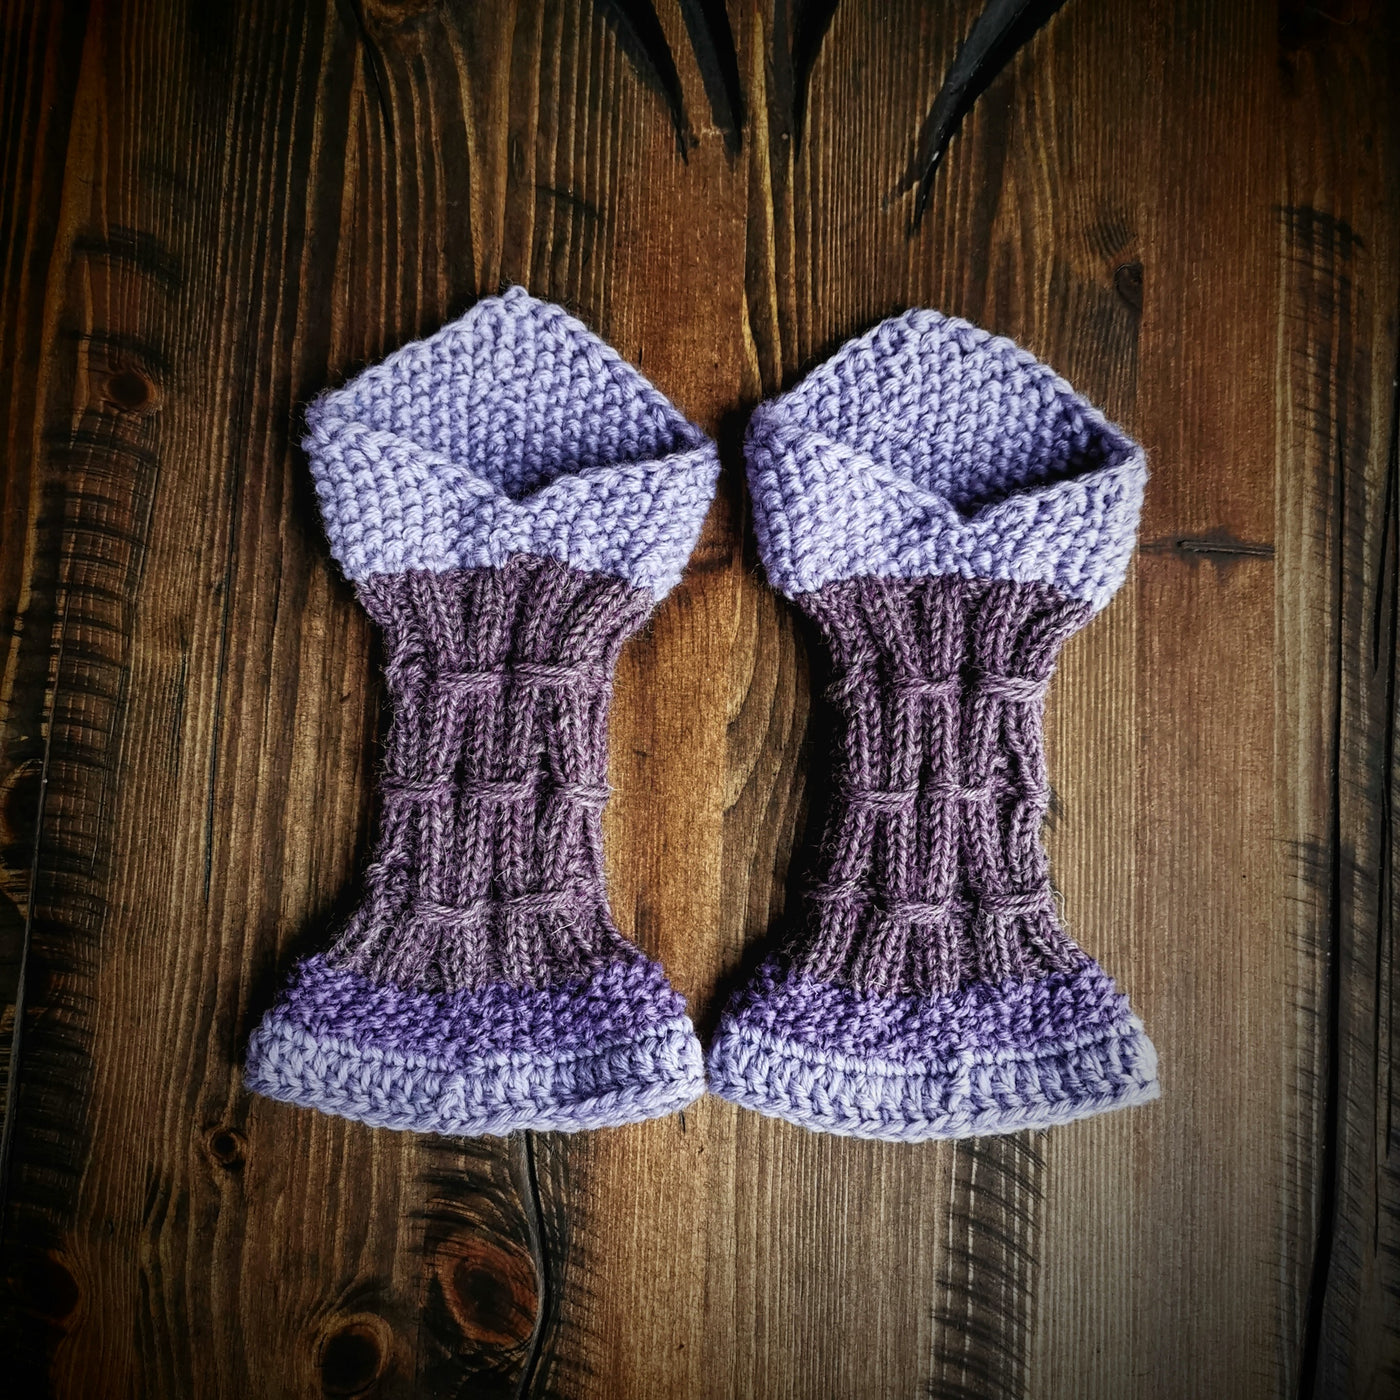 Handmade knitted rich purple wrist warmers